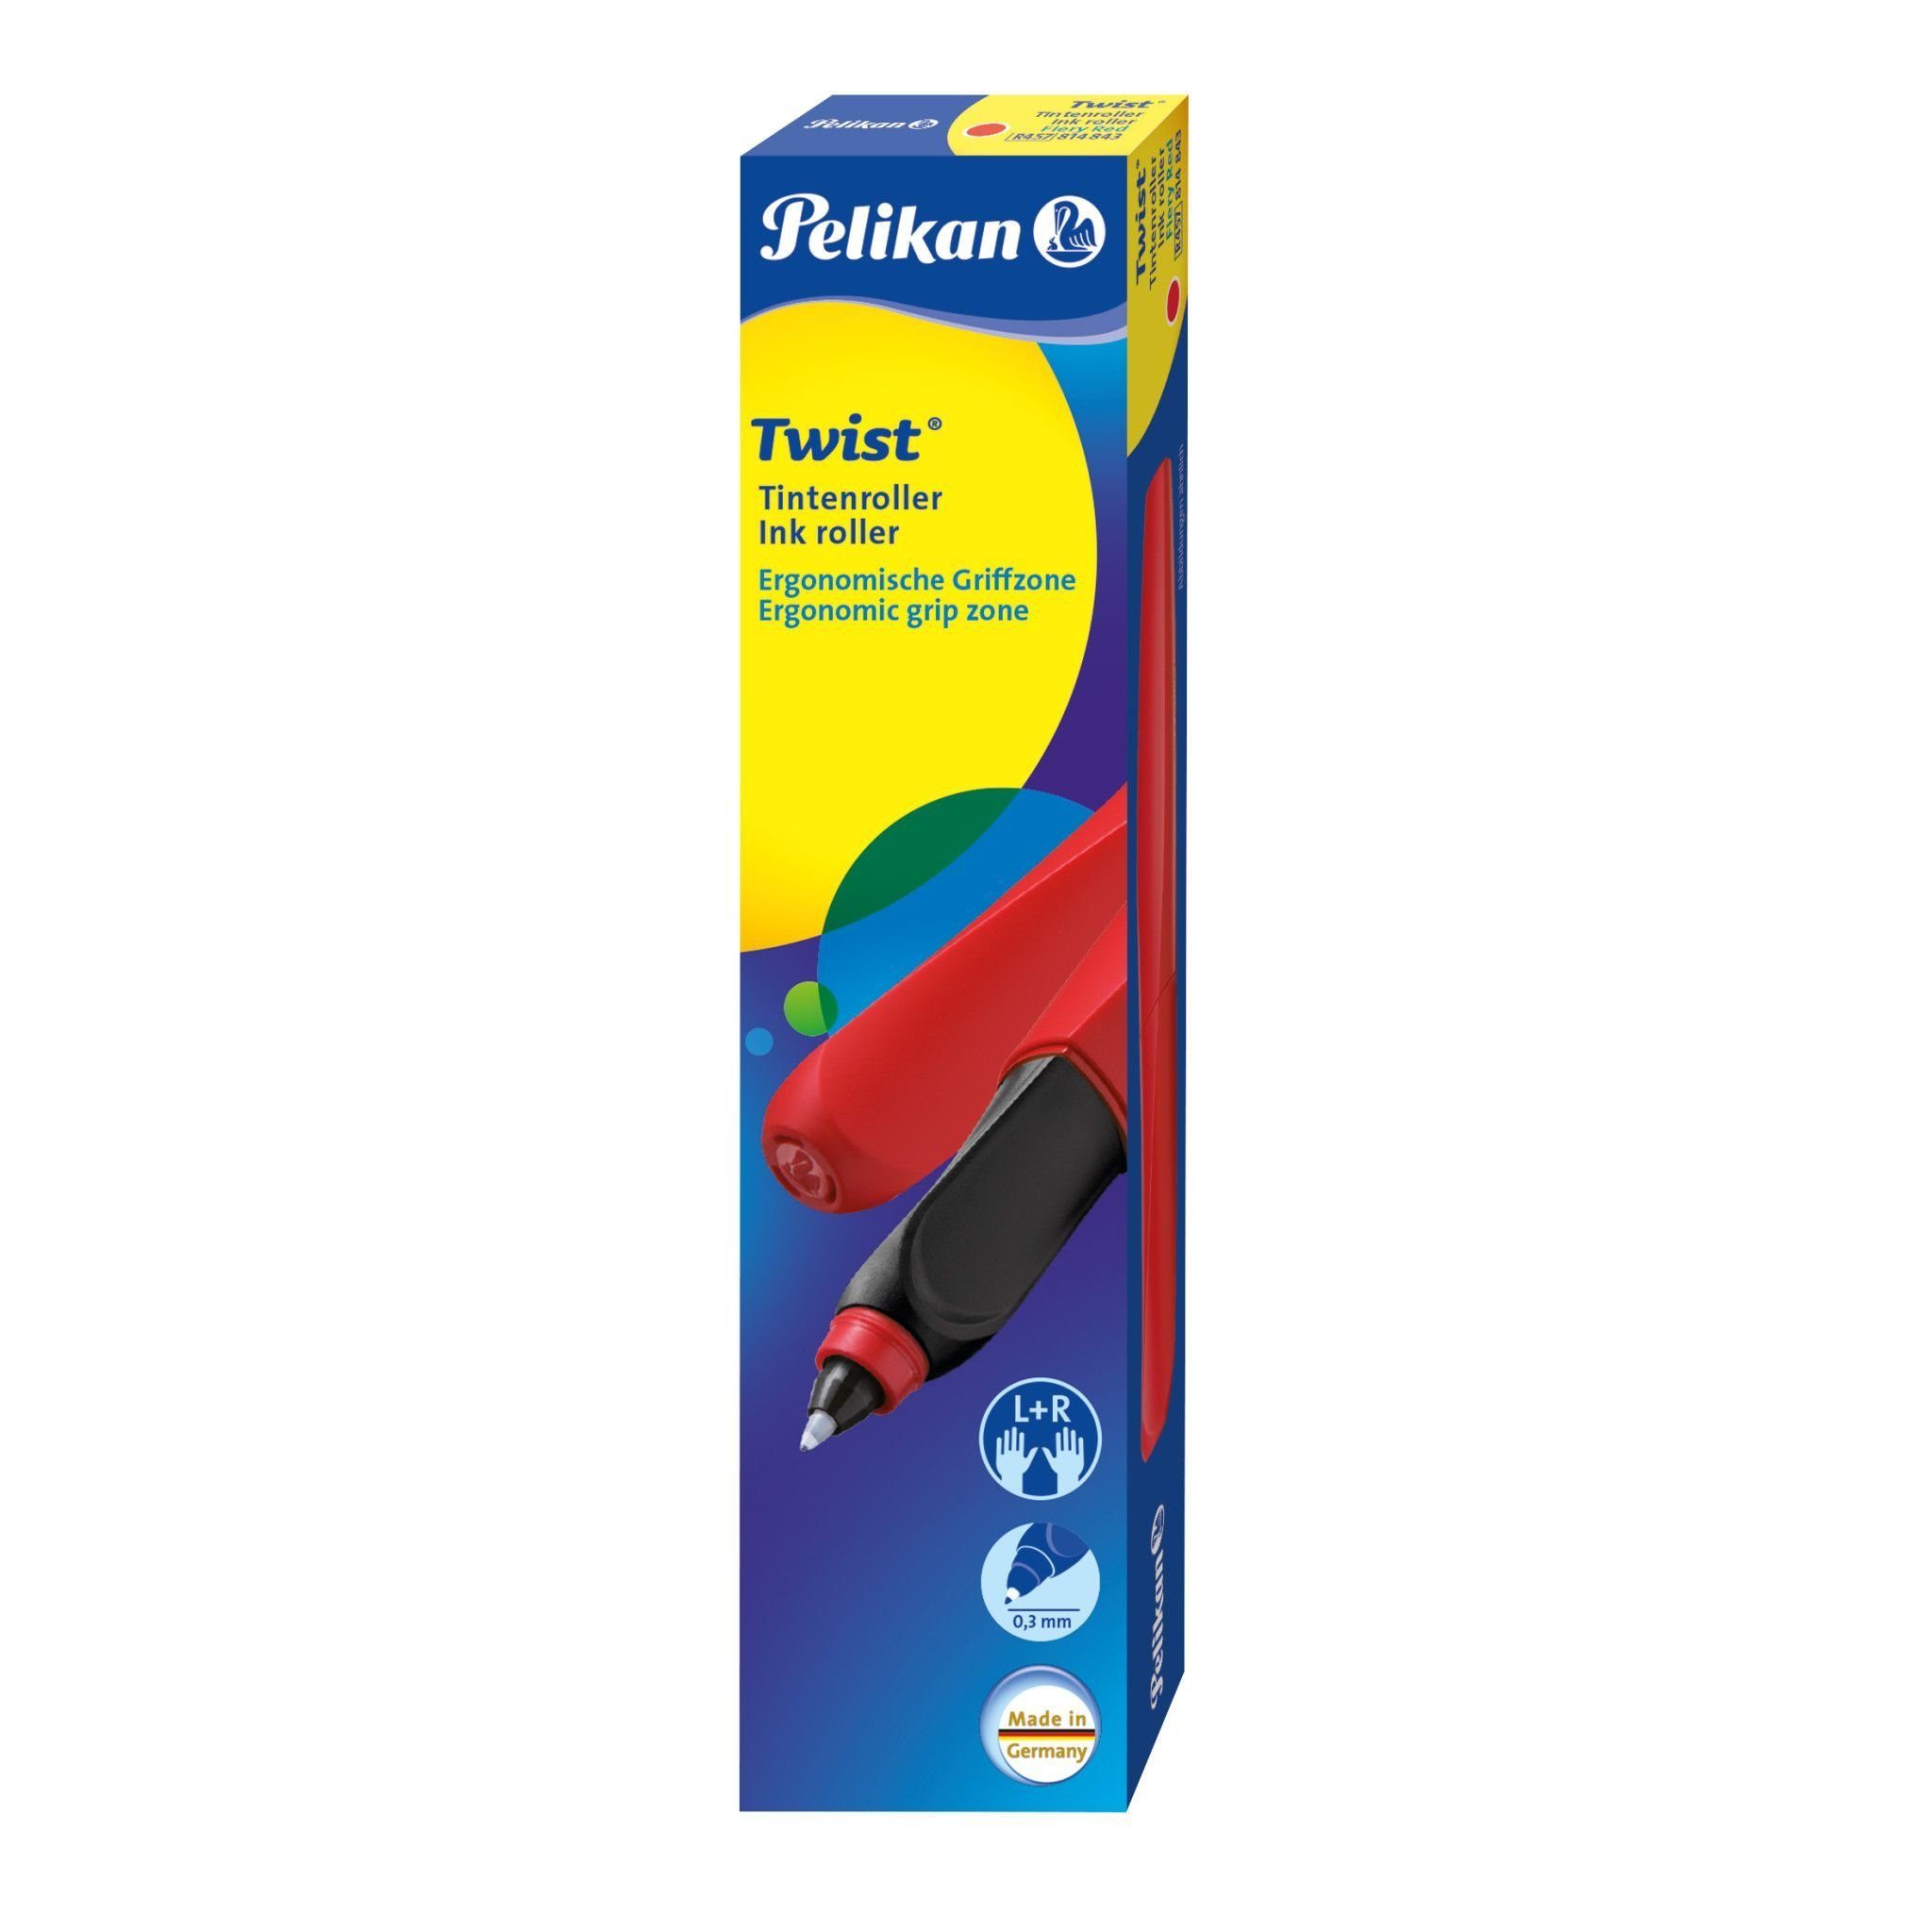 Tintenroller Tintenroller Pelikan Pelikan R457 Twist Red Fiery